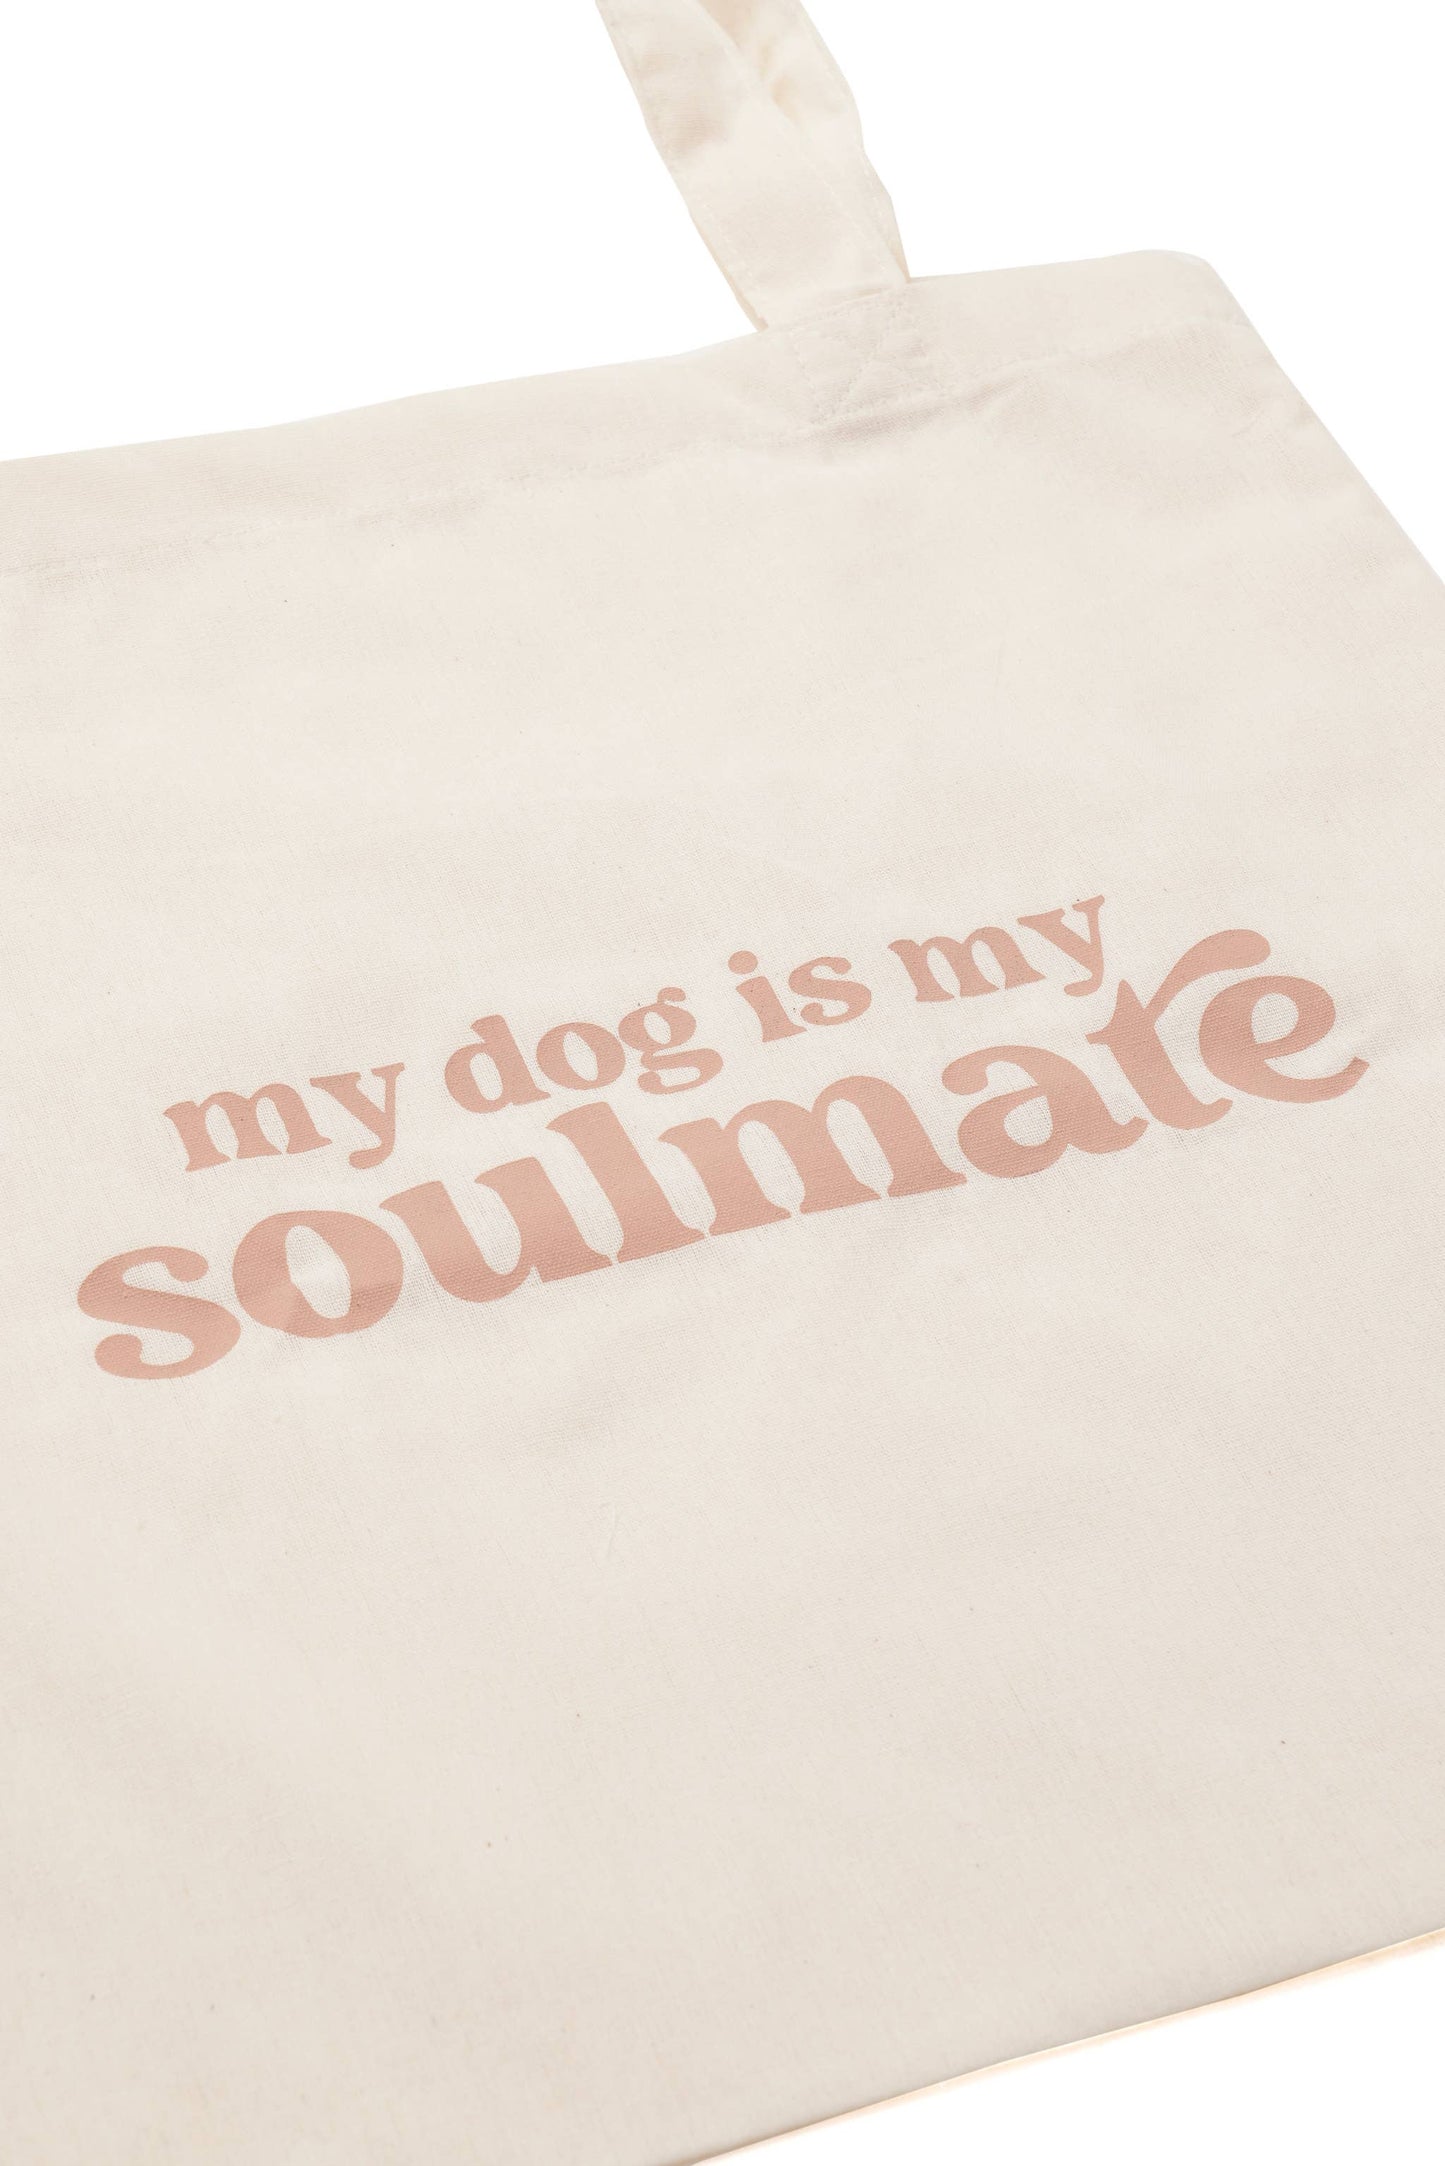 My Dog is My Soulmate Tote Bag